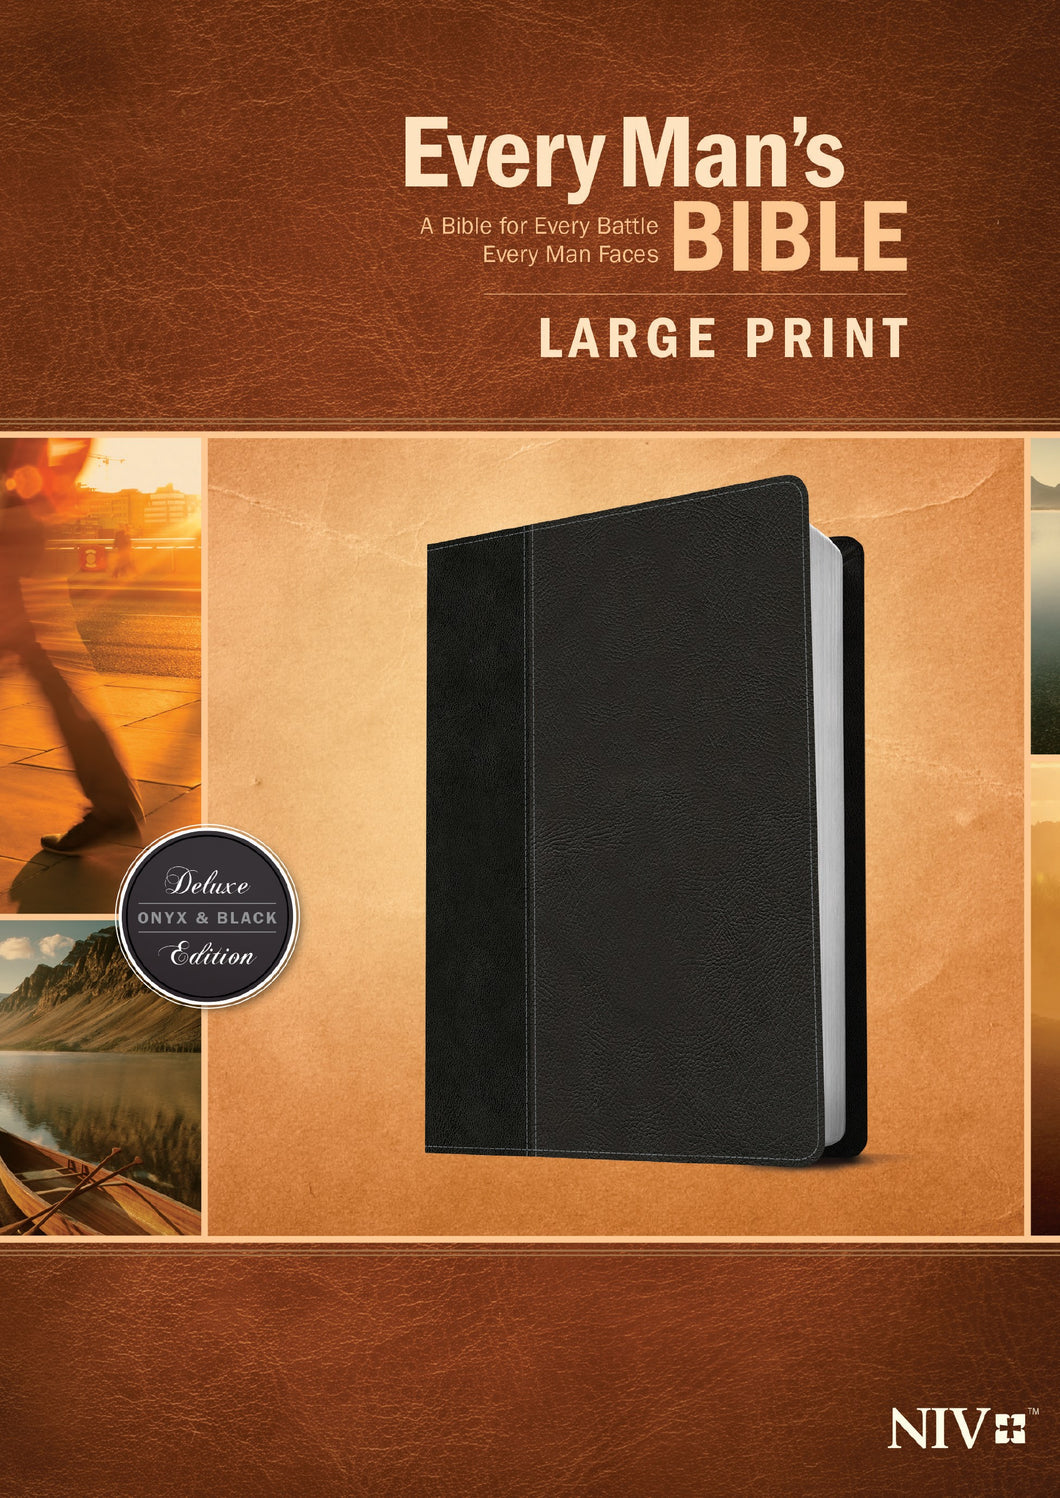 NIV Every Man's Bible/Large Print-Black/Onyx TuTone